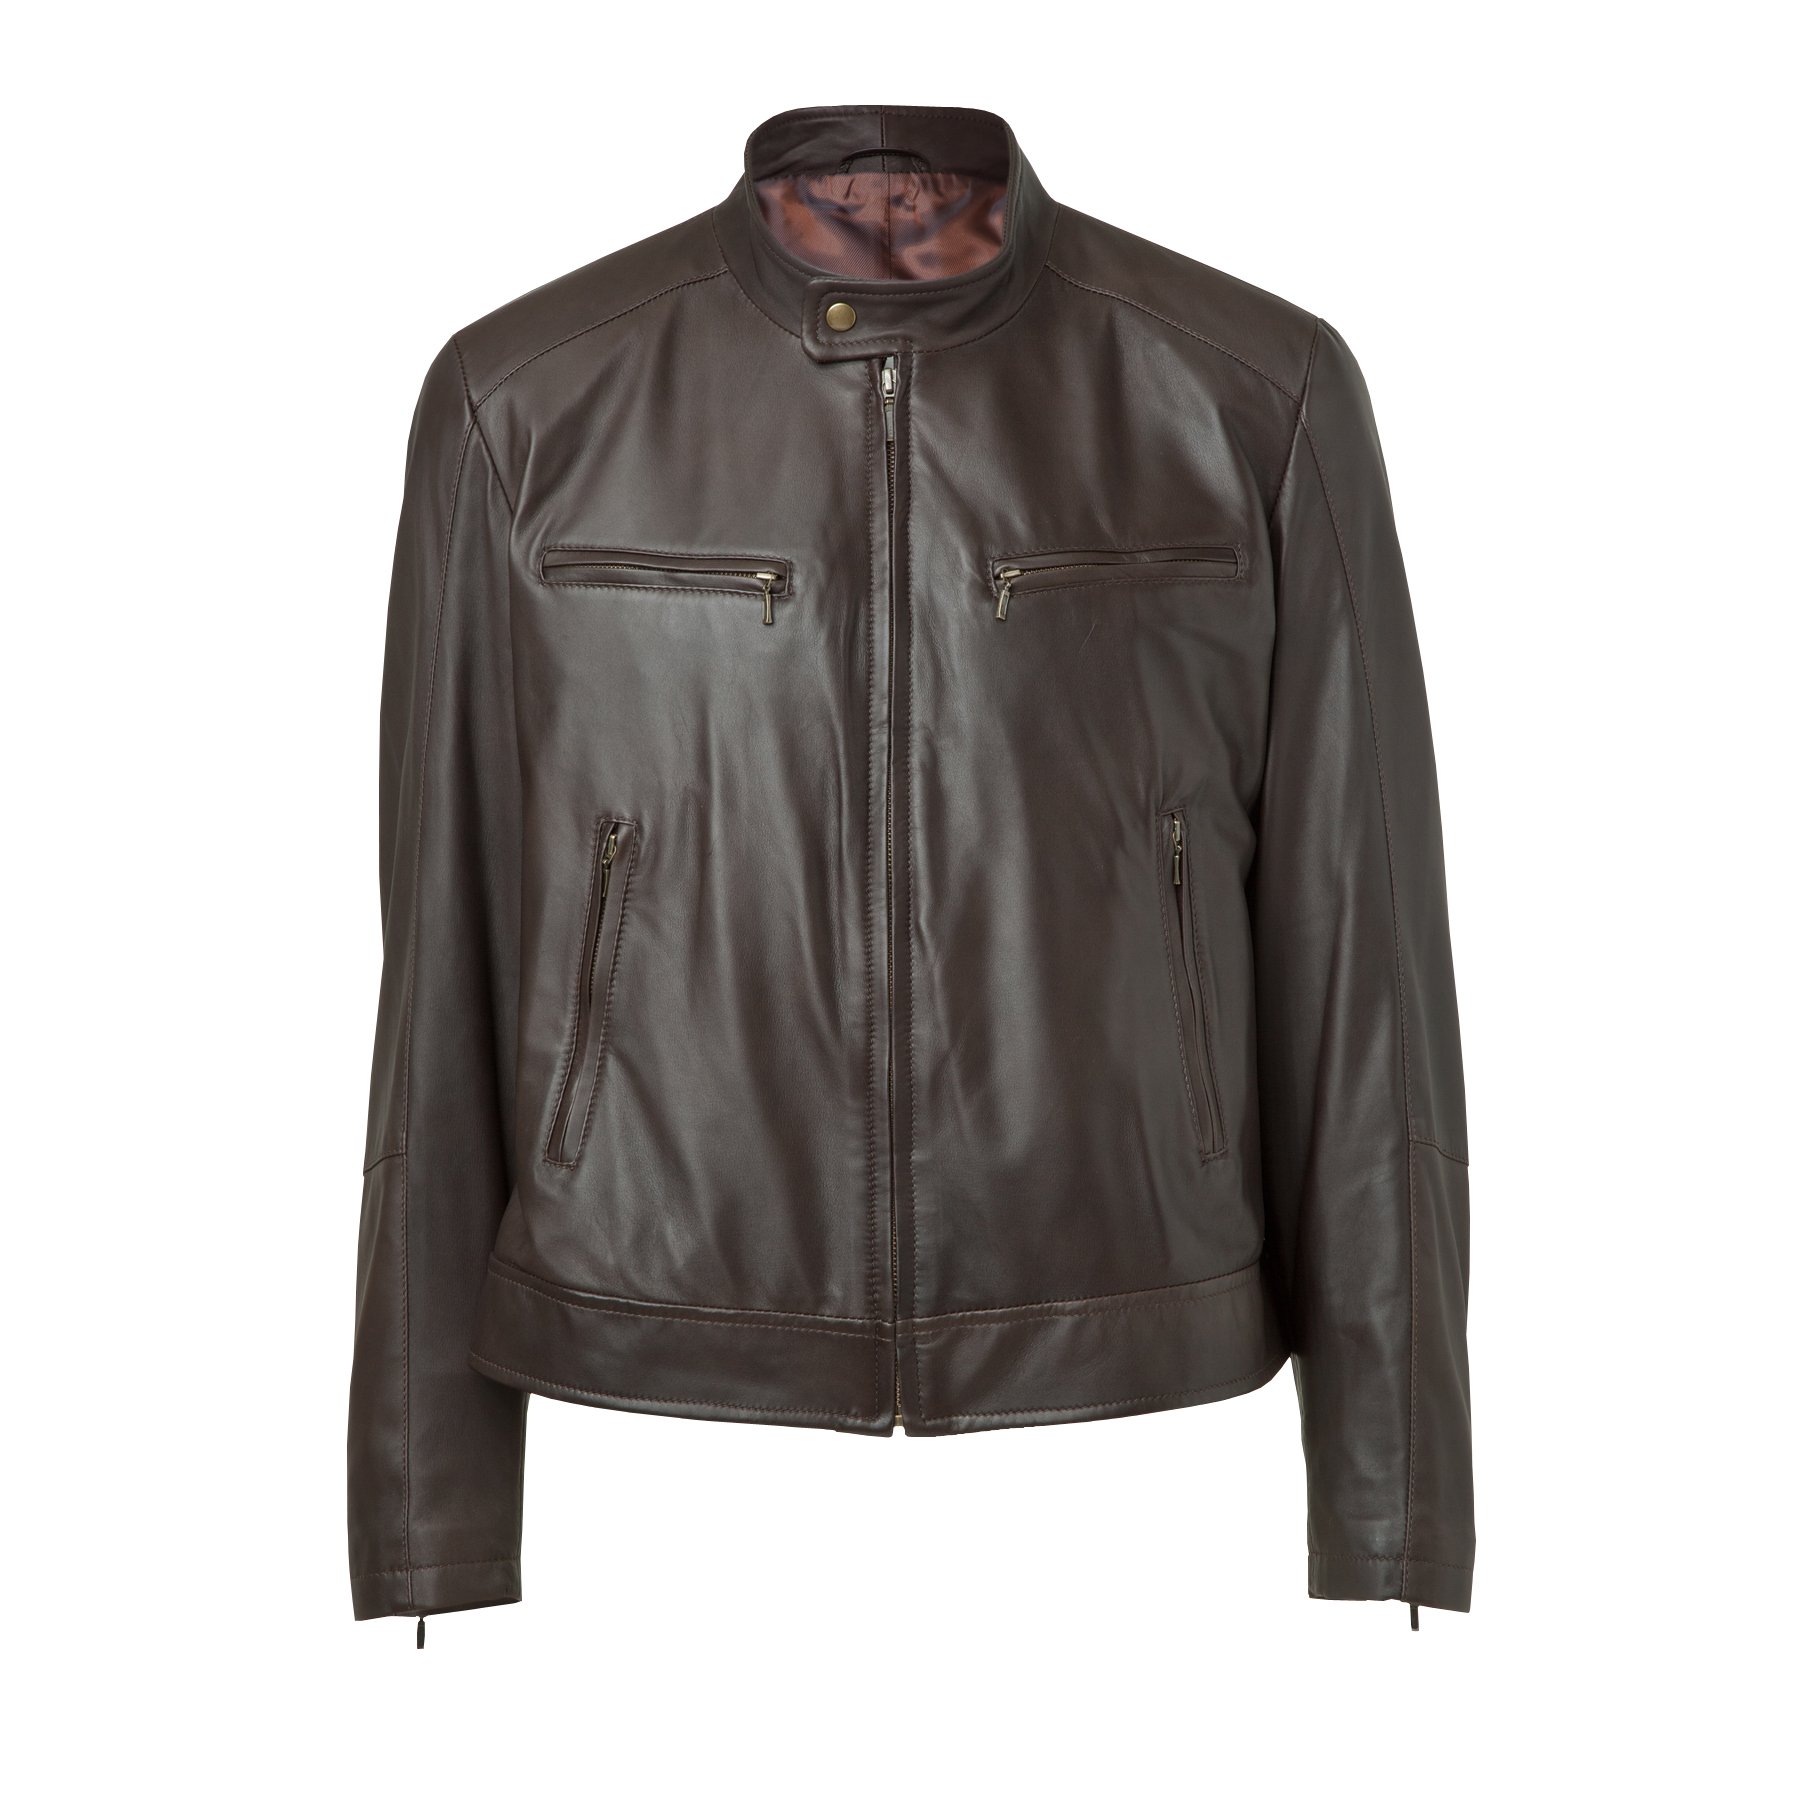 Buy 28 oz Reindeer Leather Jacket online